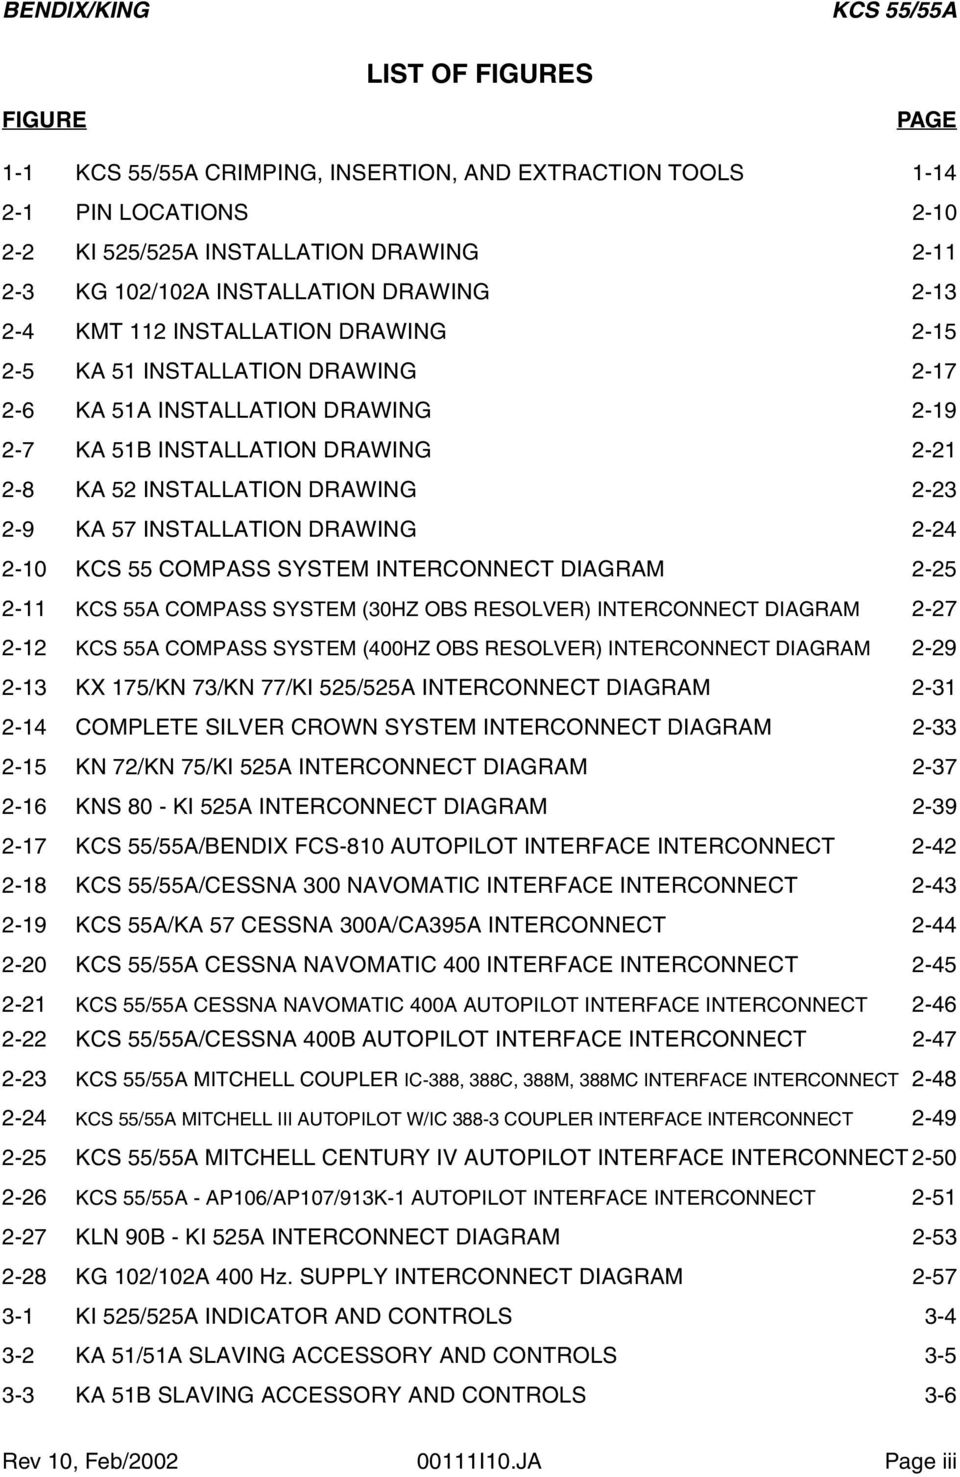 Installation Manual Kcs 55 55a Pictorial Navigation System Pdf Free Download